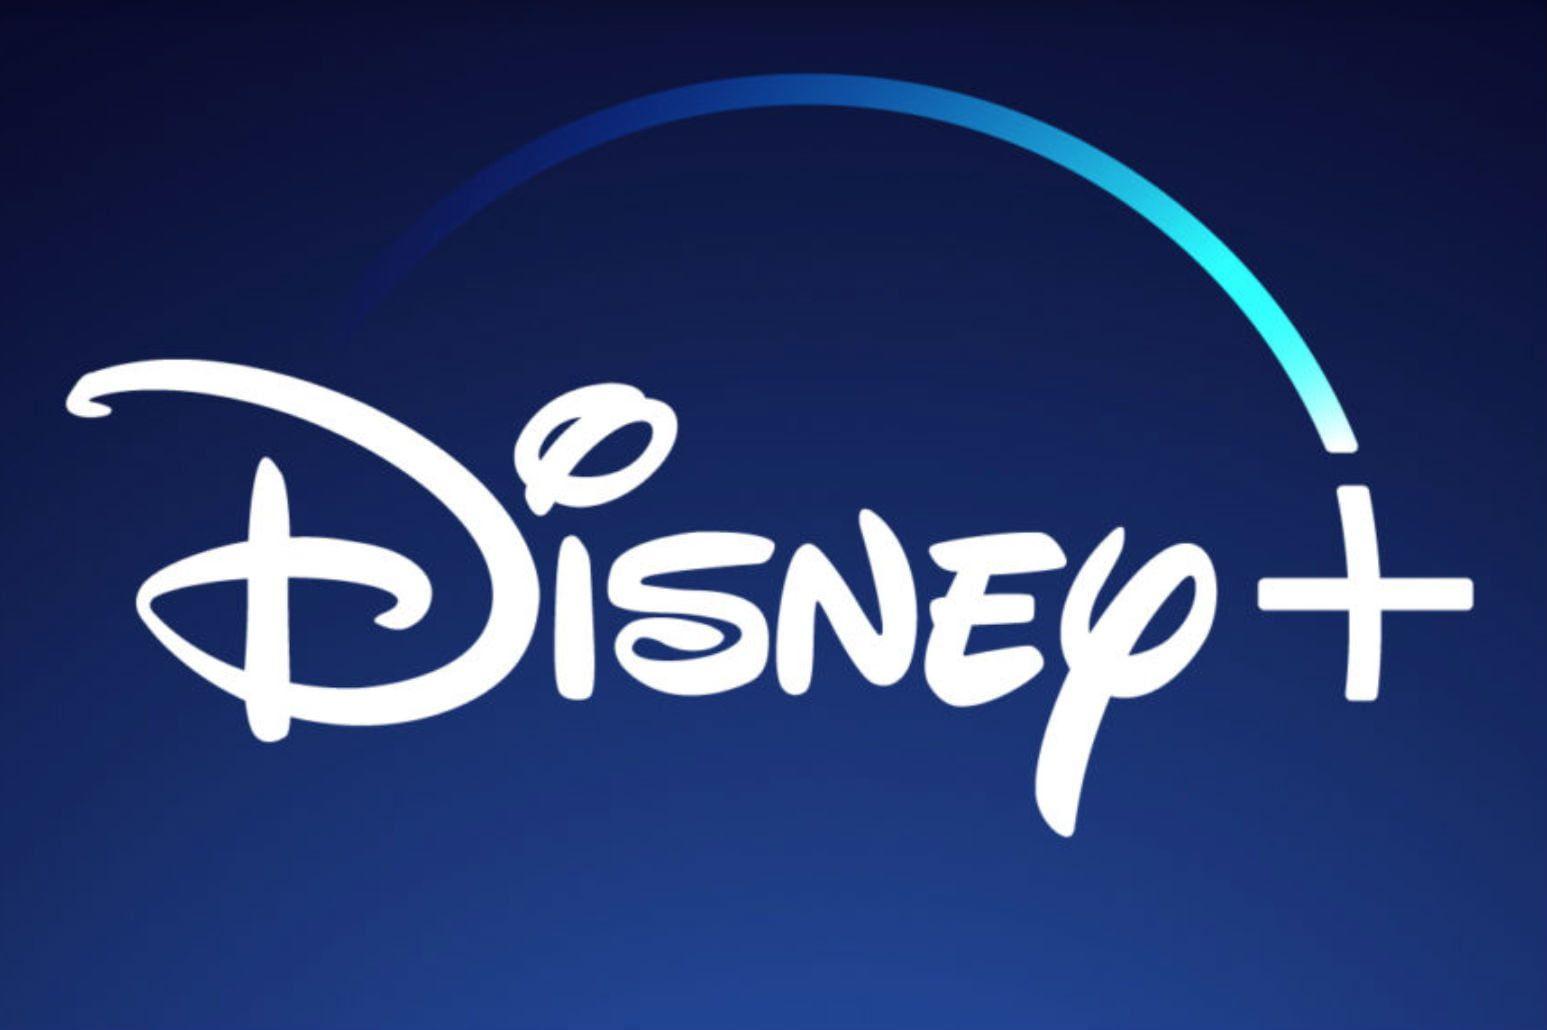 Disney 2019 Logo - Disney Plus: Everything We Know About Disney's Streaming Service ...